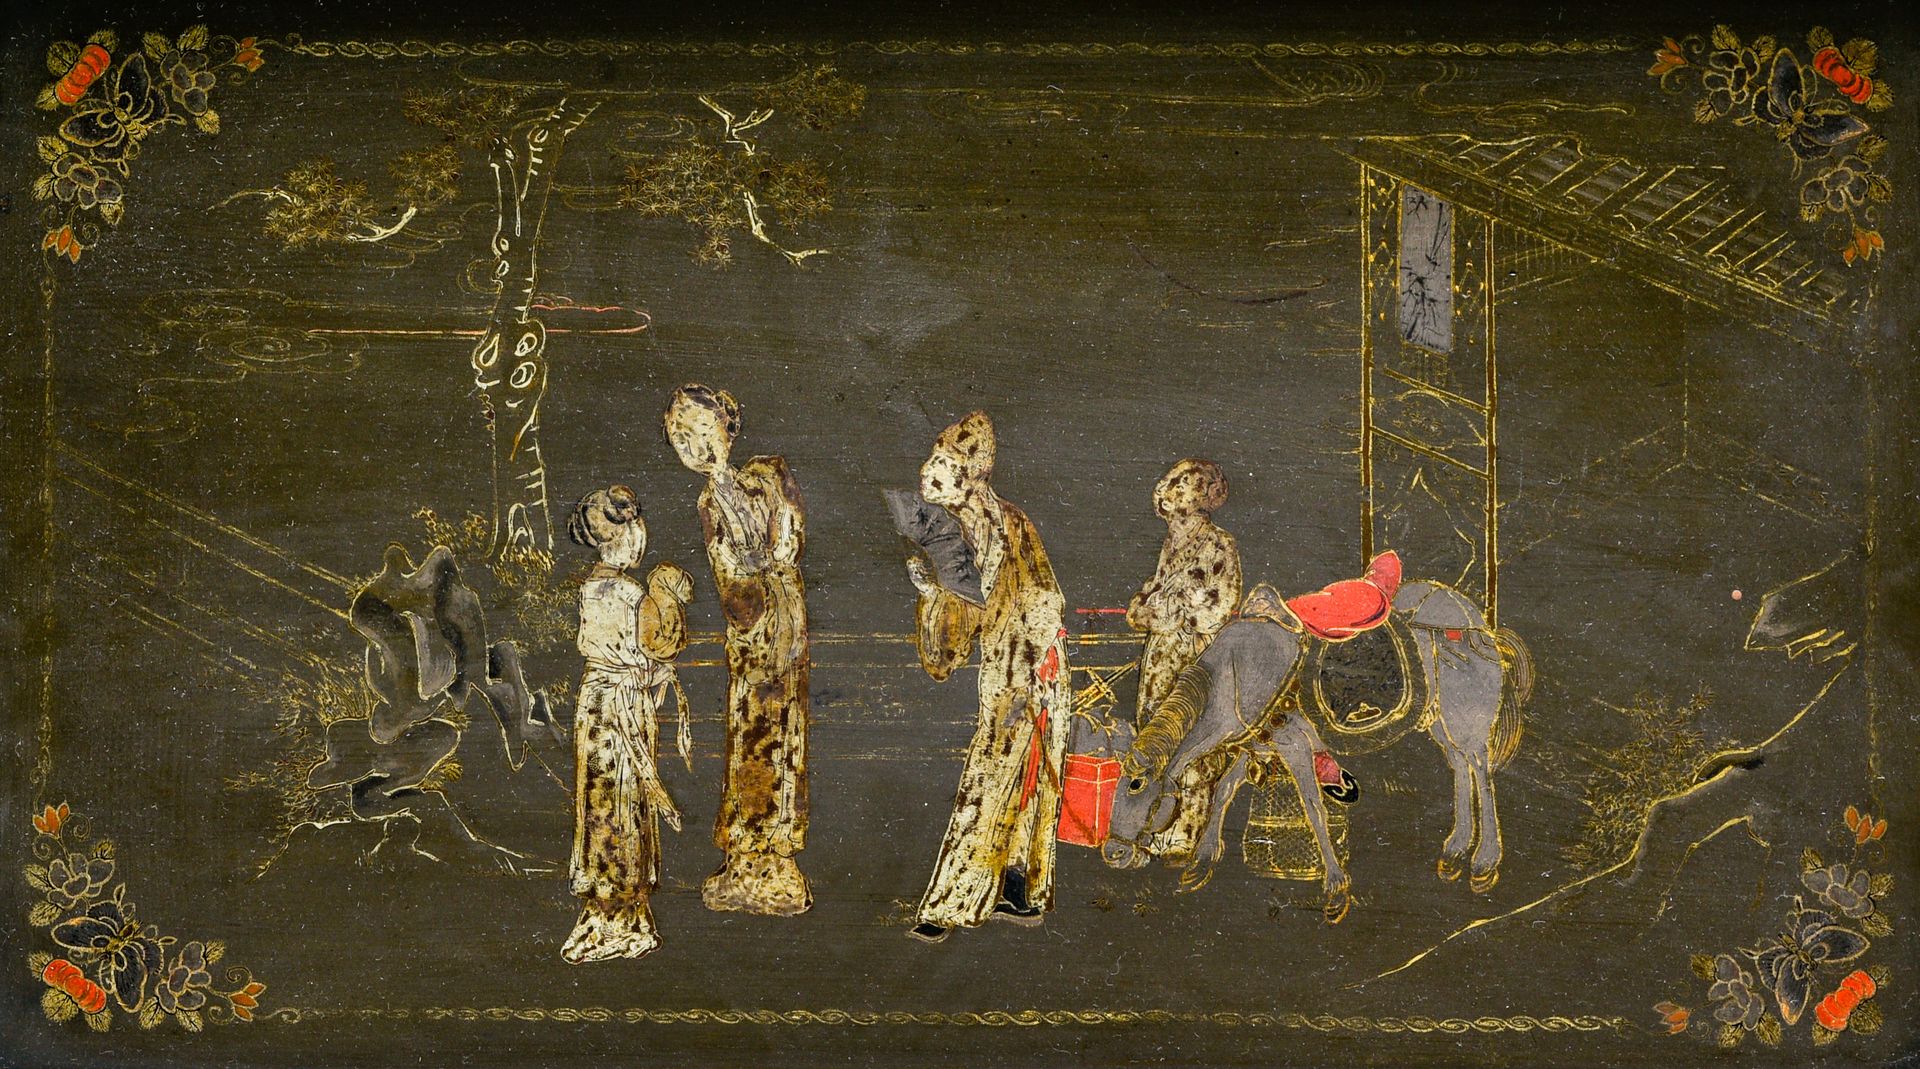 Null 中国，广东 - 约1900年

长方形托盘



棕色和金色的漆器，装饰着一对学者在仆人的陪同下和一匹马在房子前面。边框上装饰着蝴蝶和花环。



专&hellip;